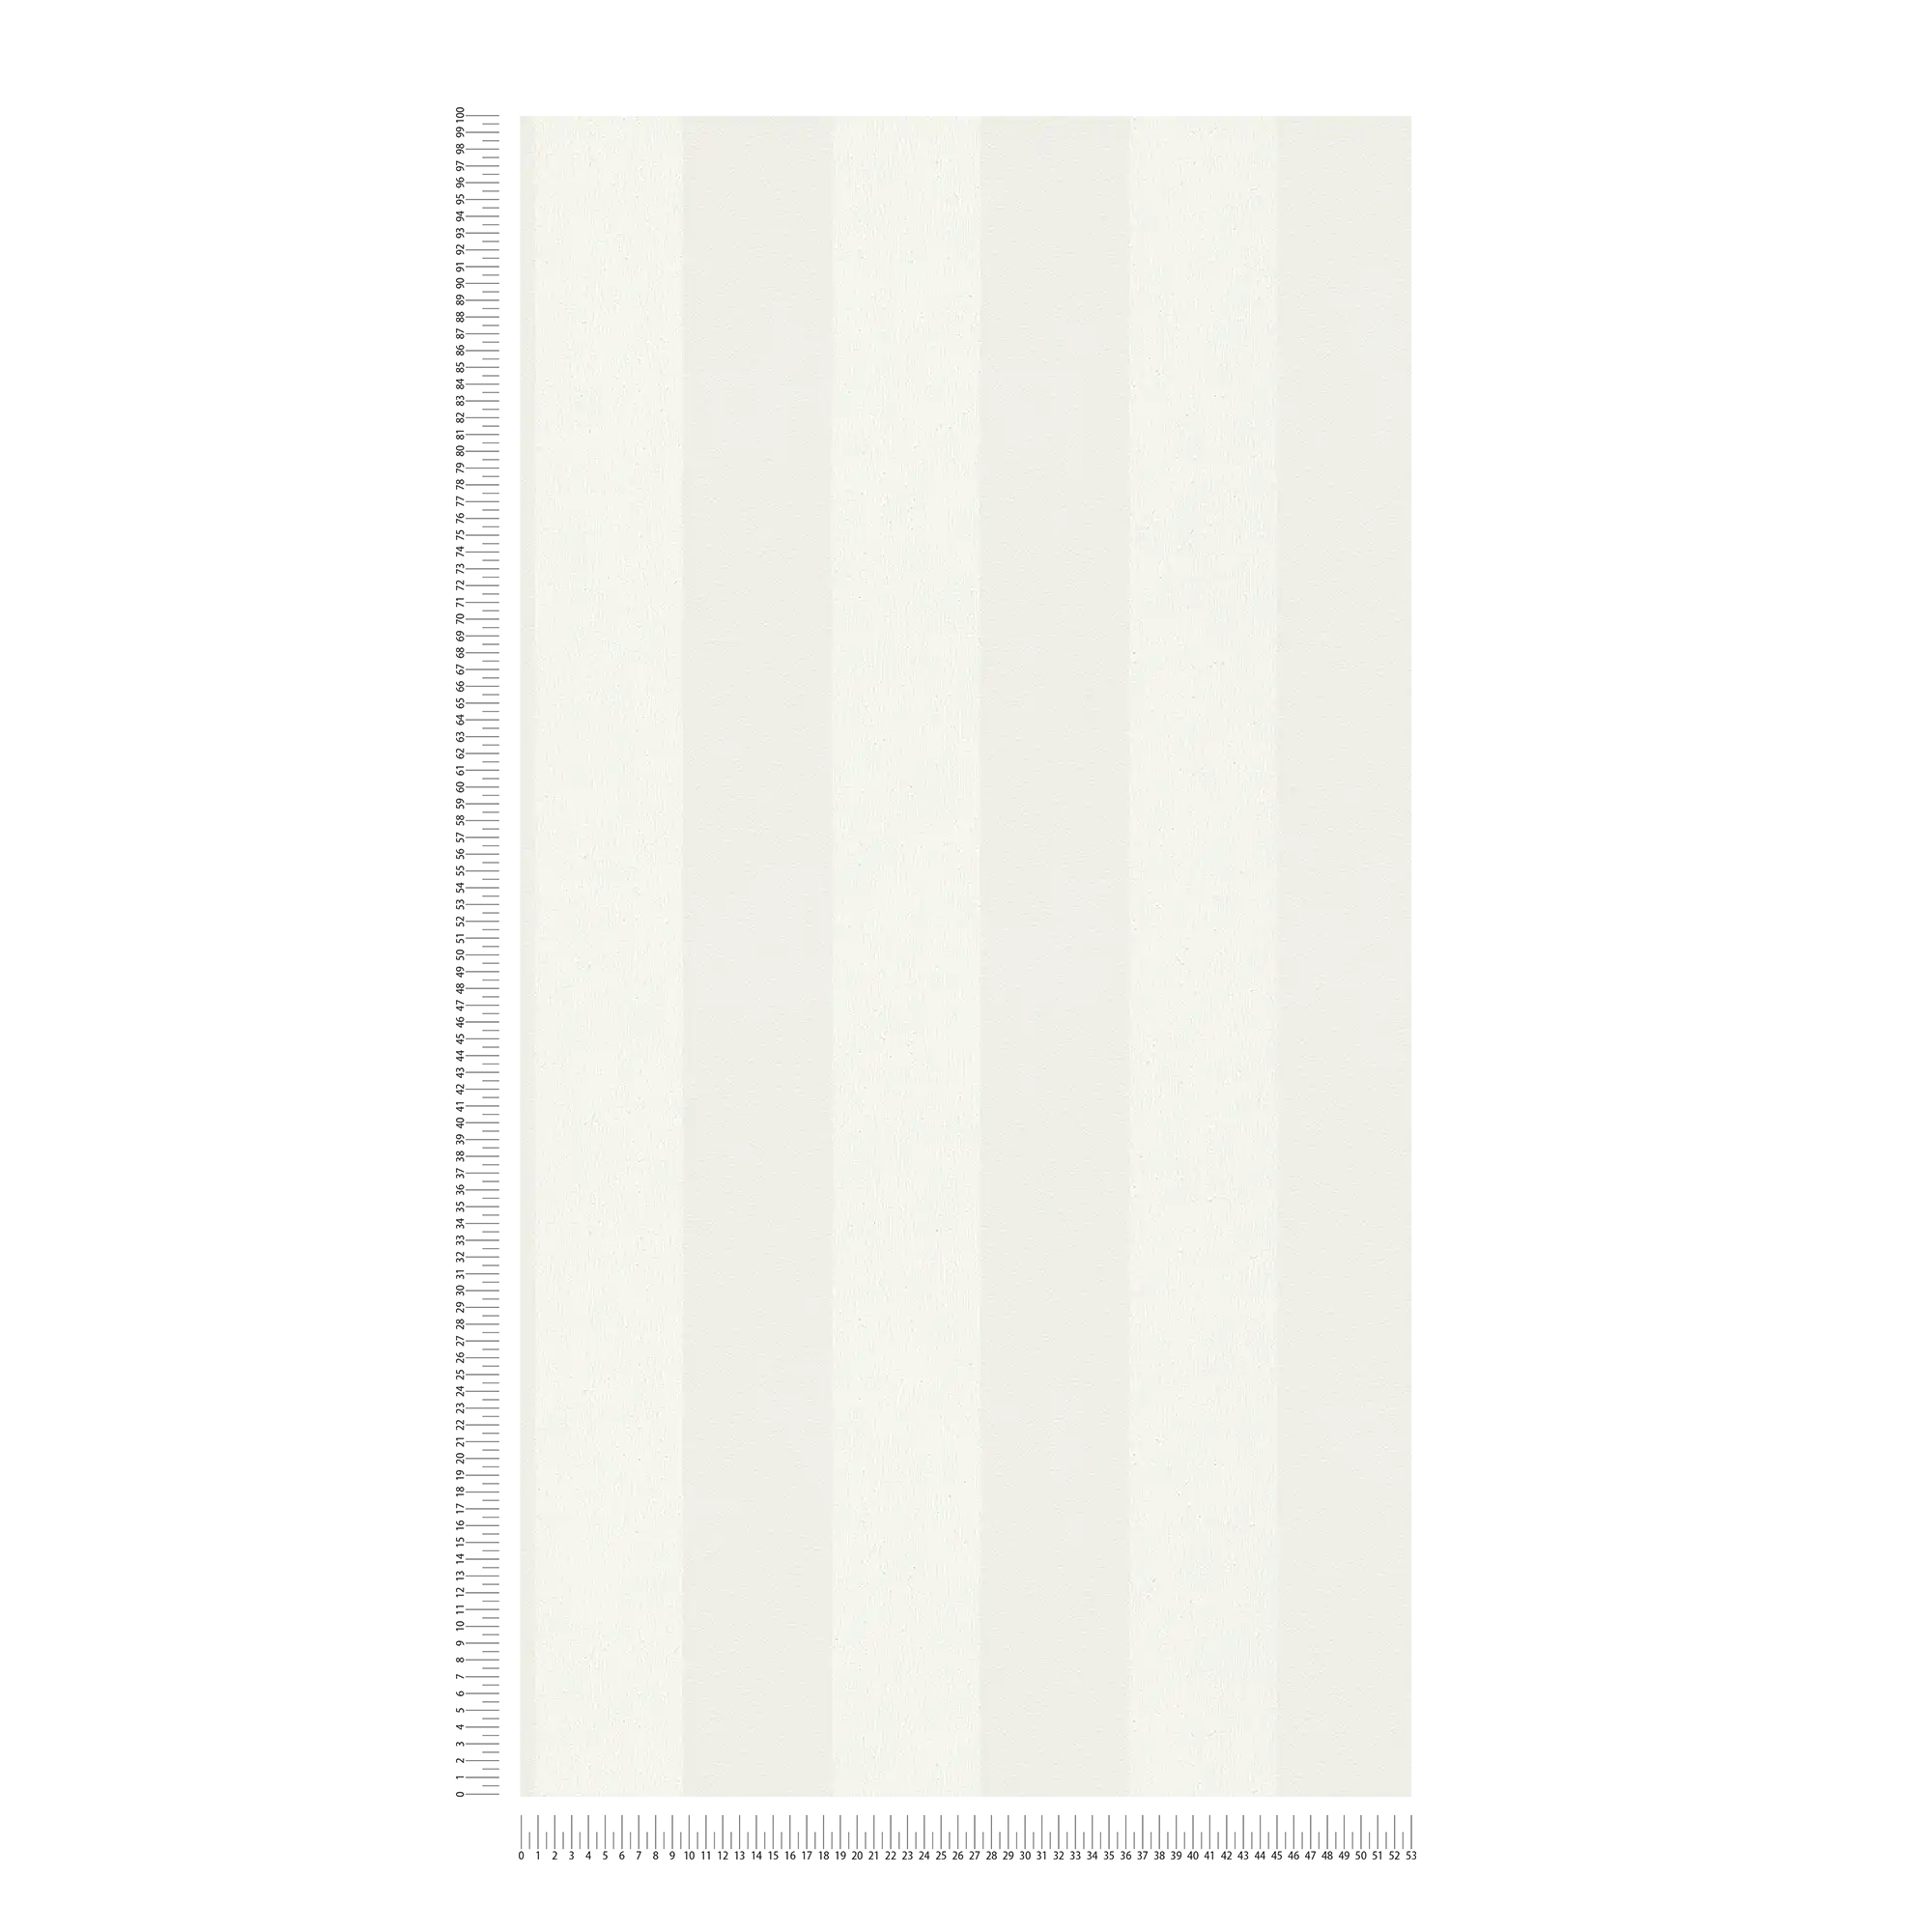             White stripe wallpaper with texture pattern & block stripes pattern
        